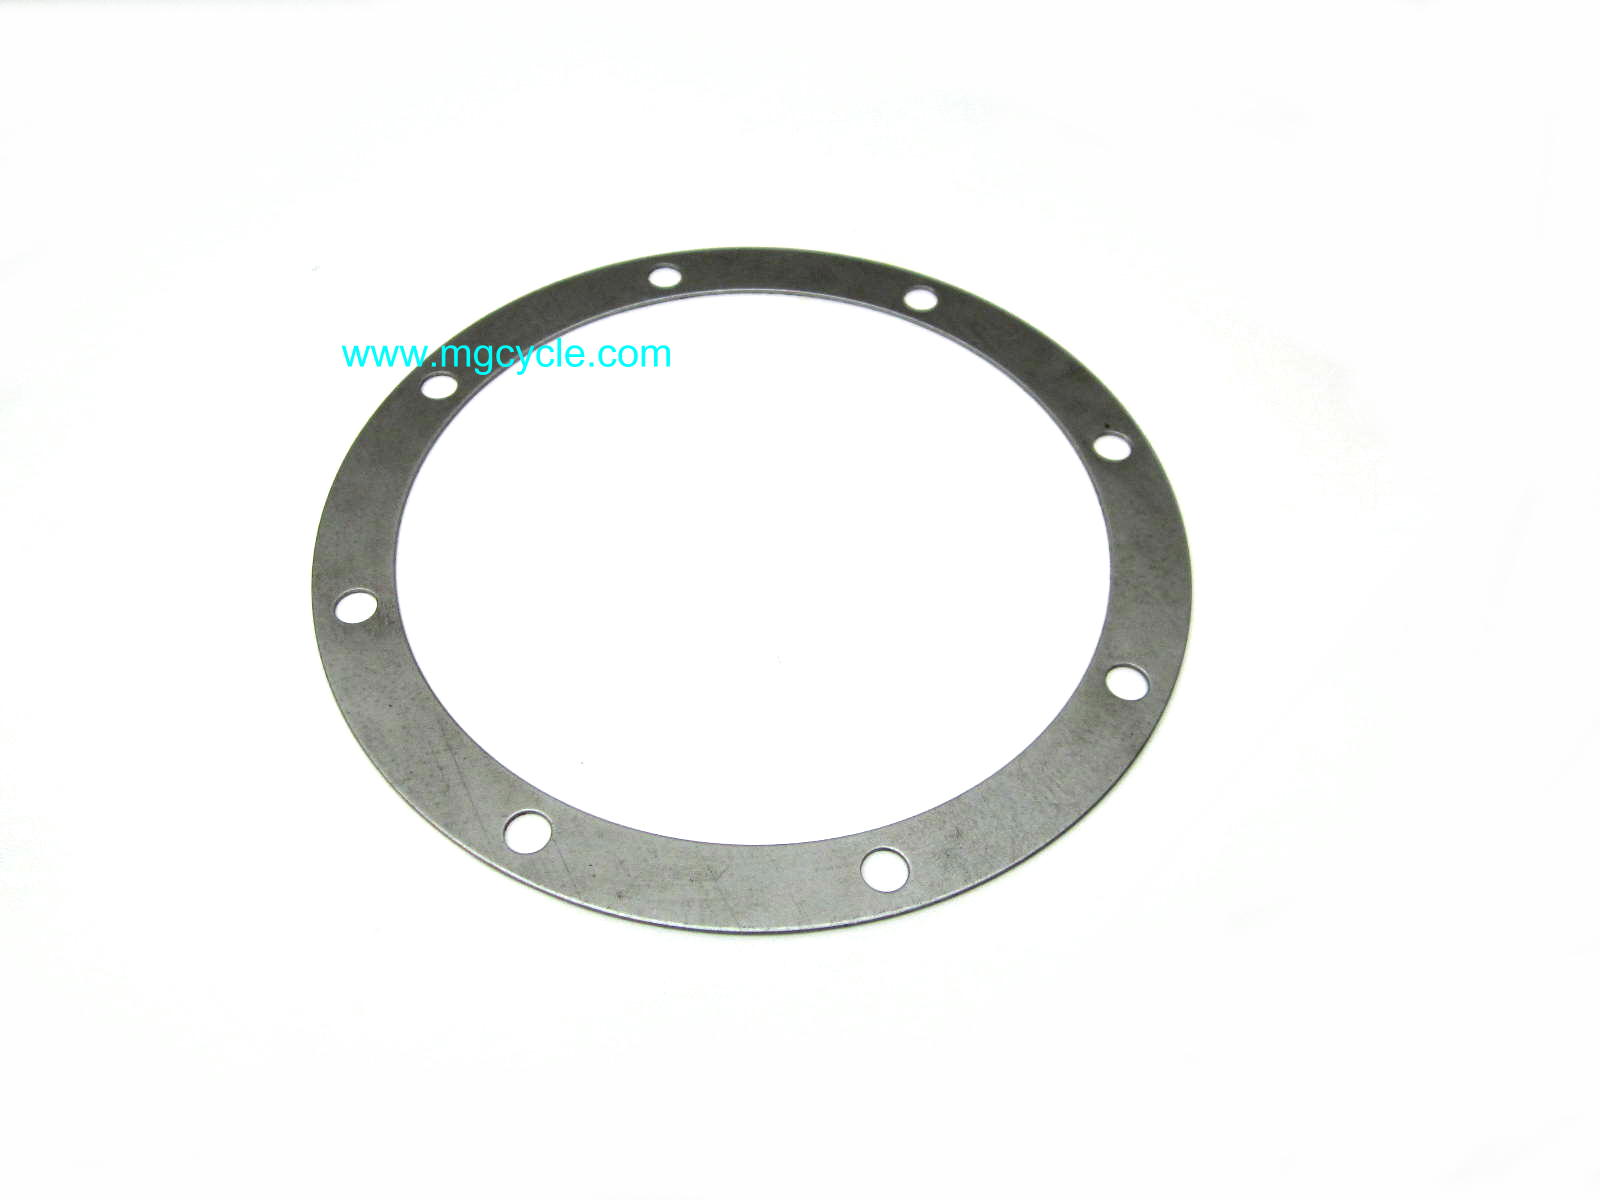 Rear drive box shim, large, Disc brake 1.3 mm GU17355410